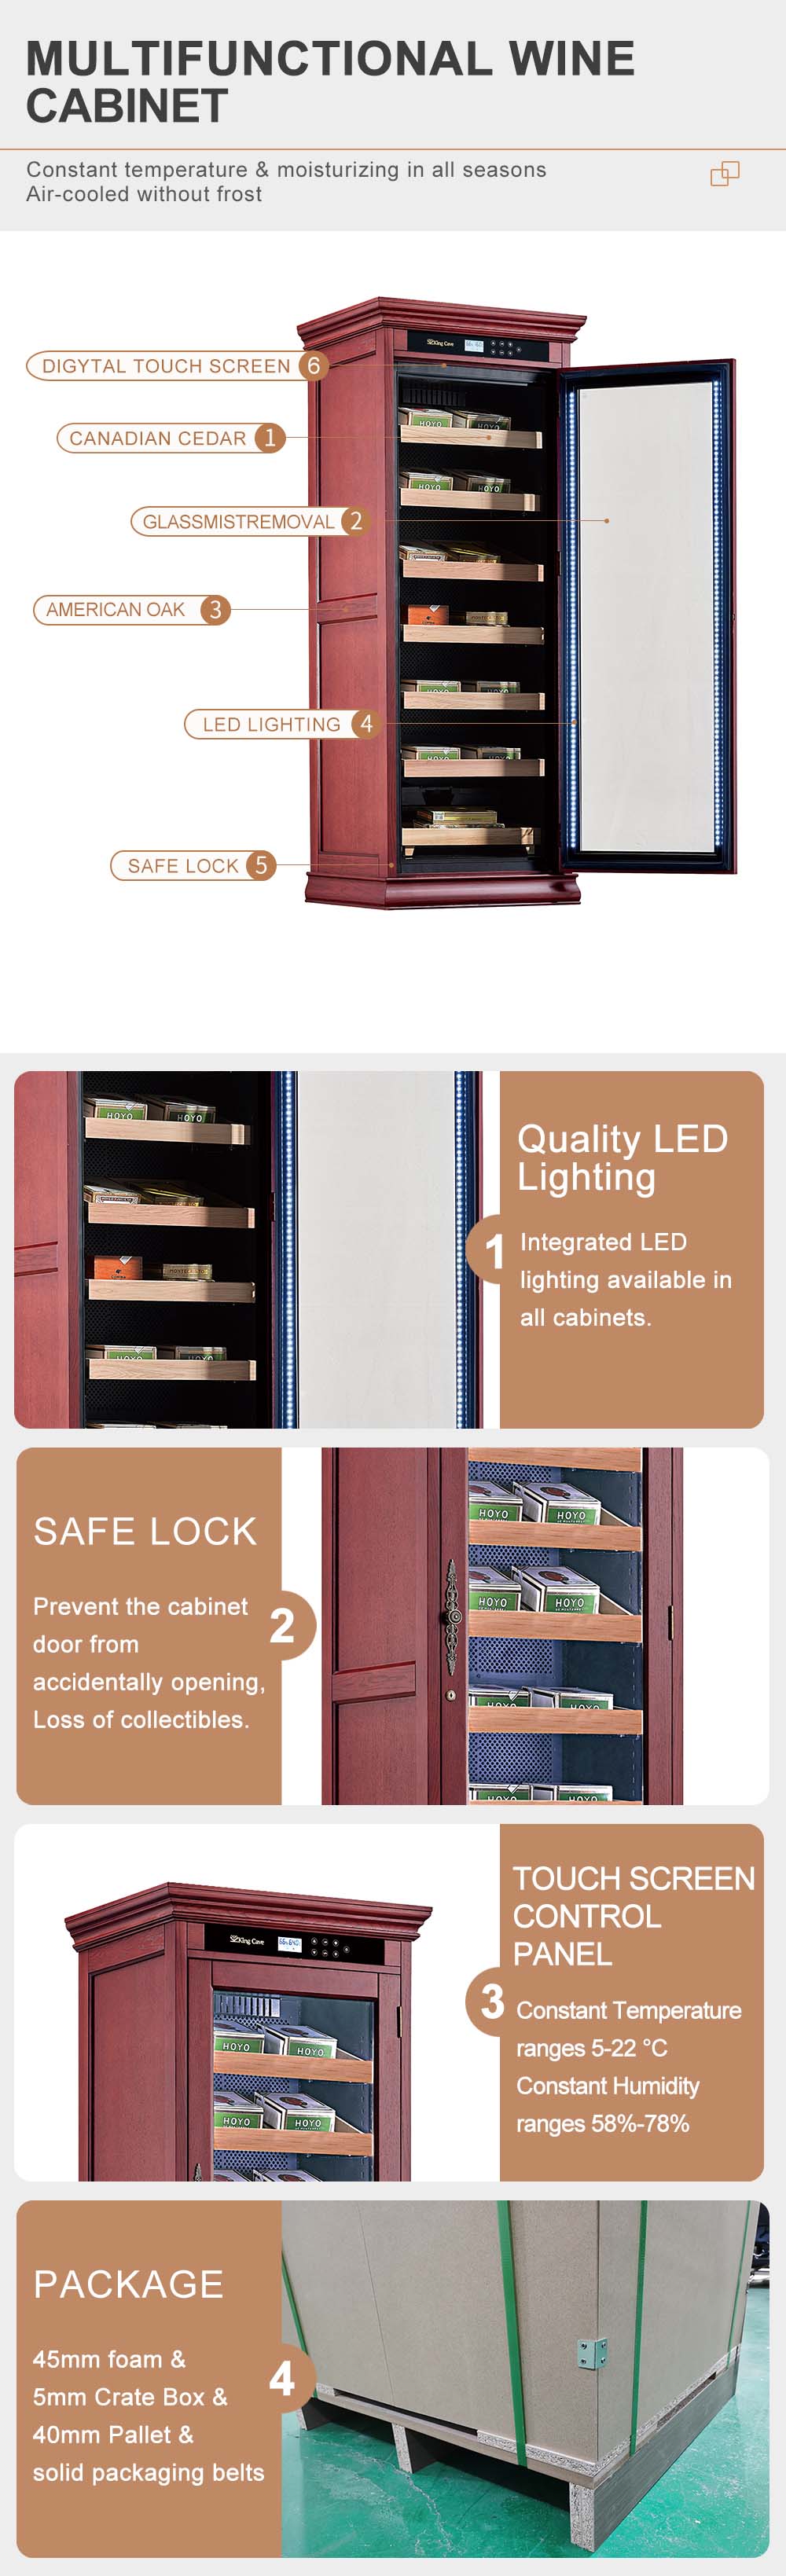 i-cigar cabinet humidification system